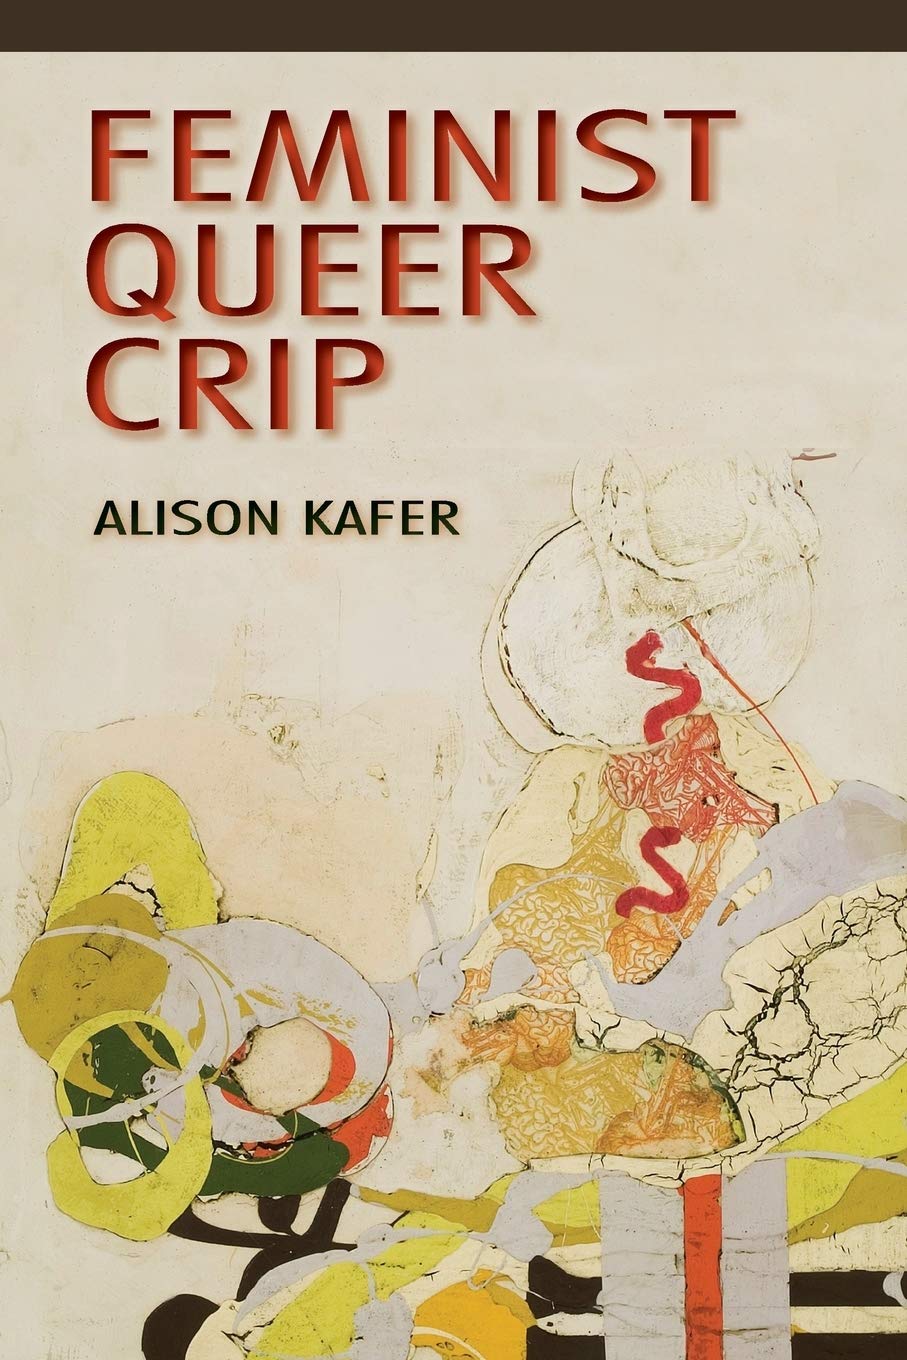 Feminist, Queer, Crip, by Alison Kafer